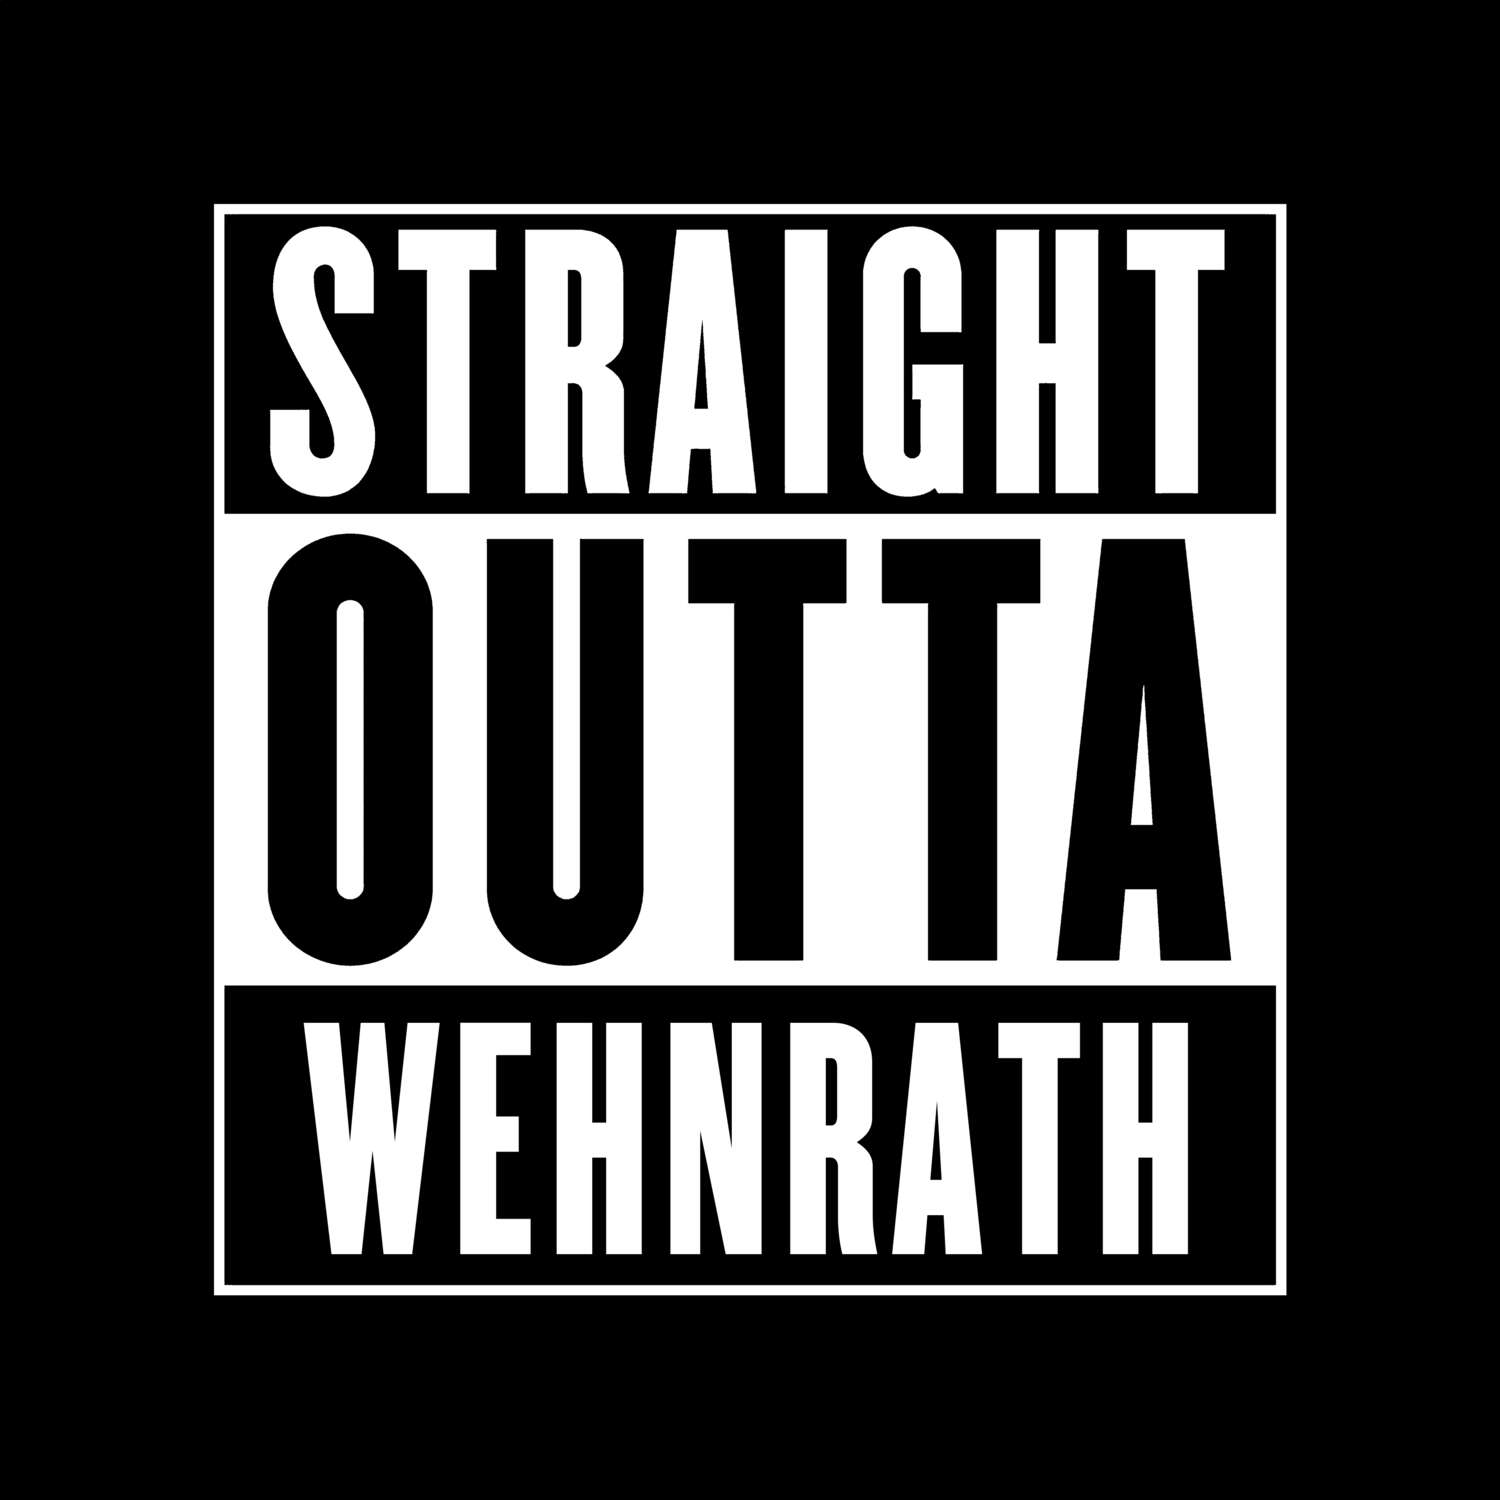 Wehnrath T-Shirt »Straight Outta«